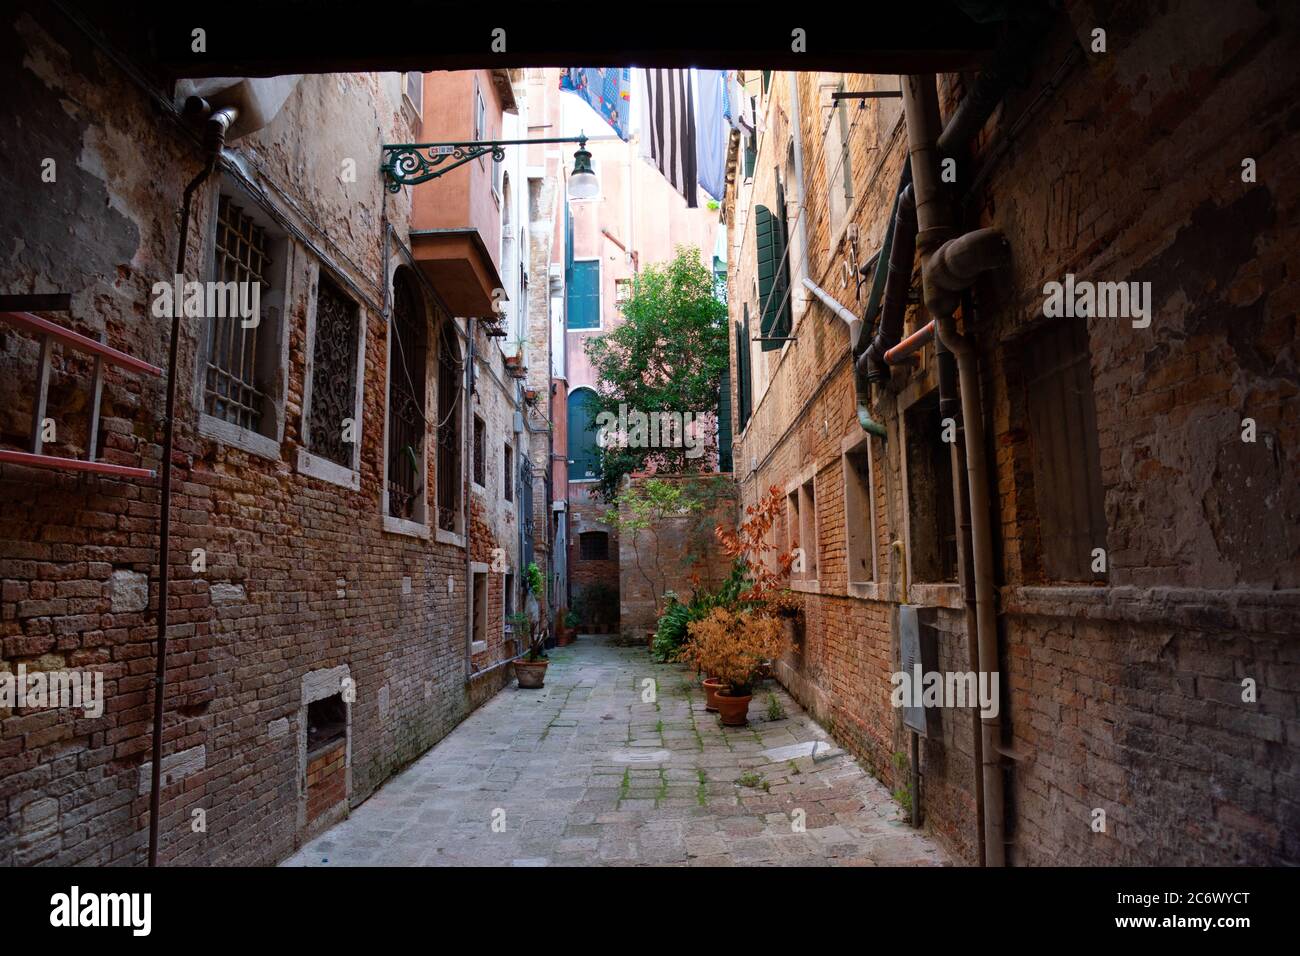 Oct. 1, 2019 - Venice, Italy: Magical streets of Venice. Stock Photo